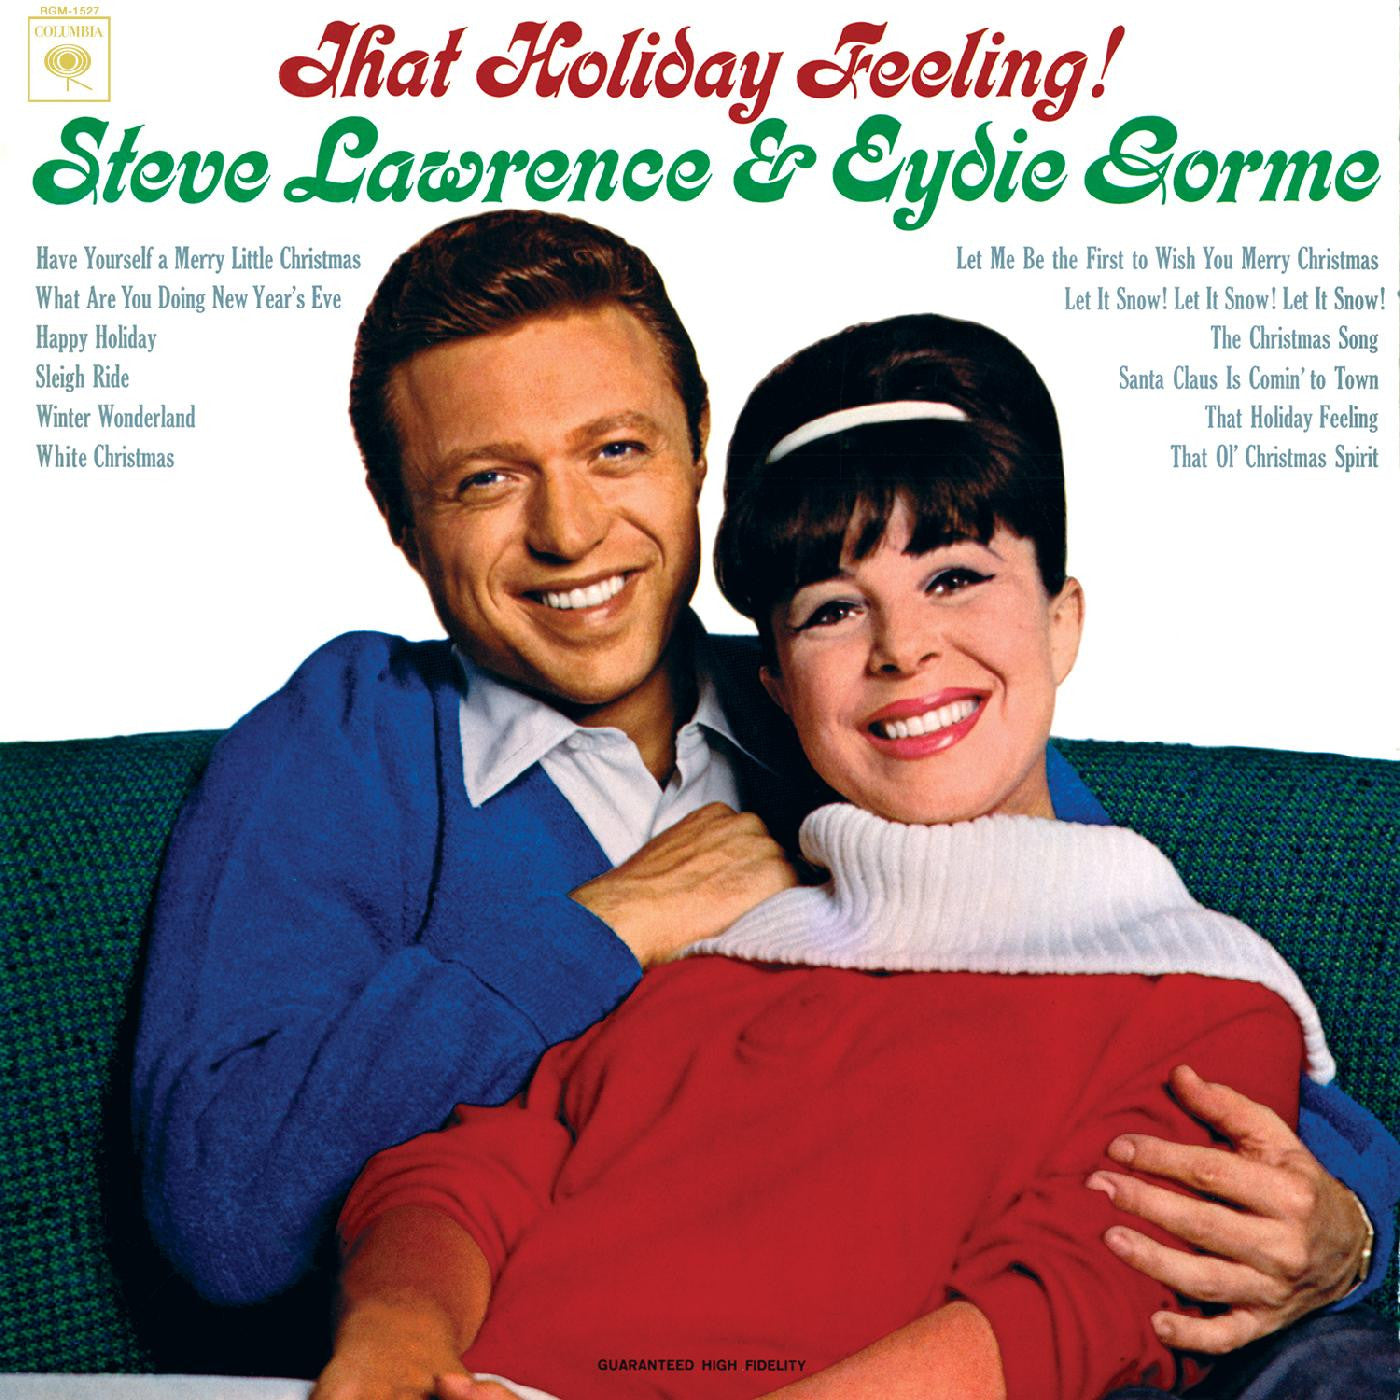 Steve Lawrence & Eydie Gorme - That Holiday Feeling! (Remastered) [Green Vinyl]